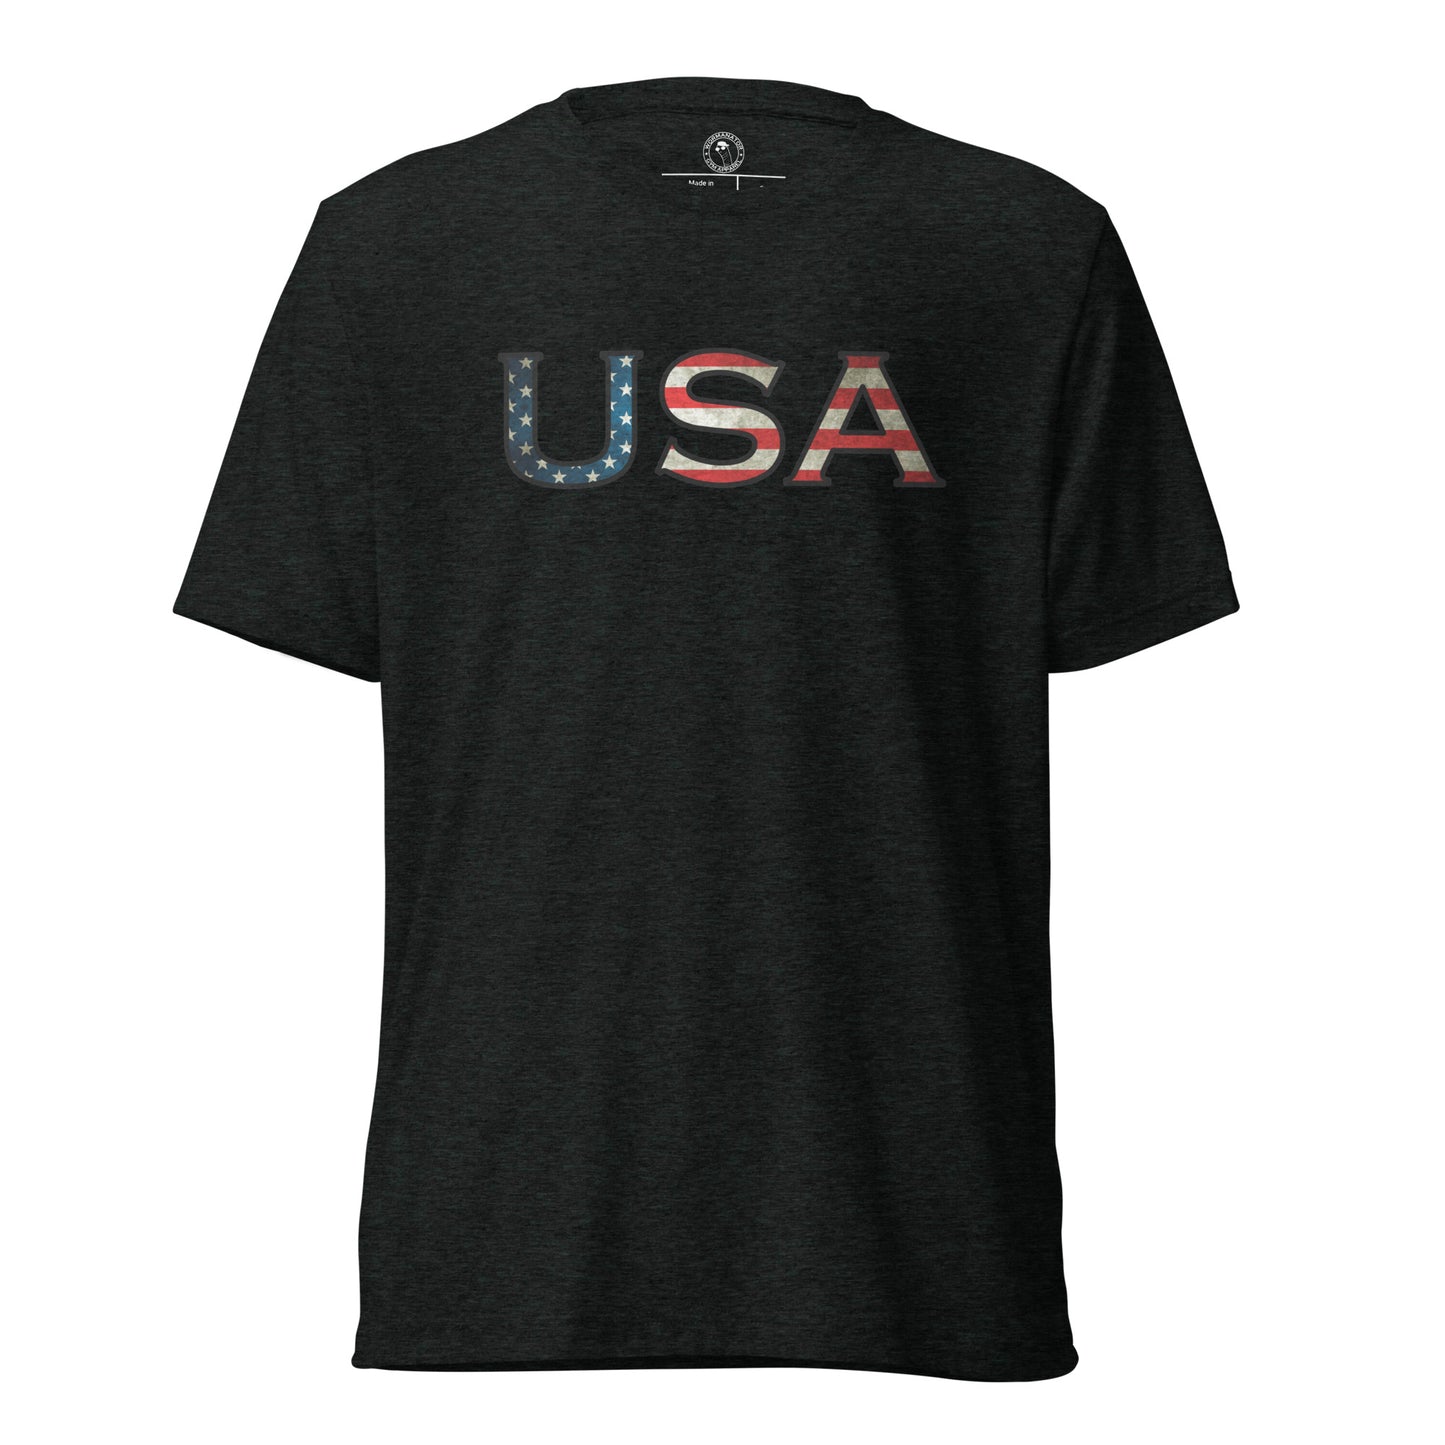 USA T-Shirt in Charcoal Black Triblend